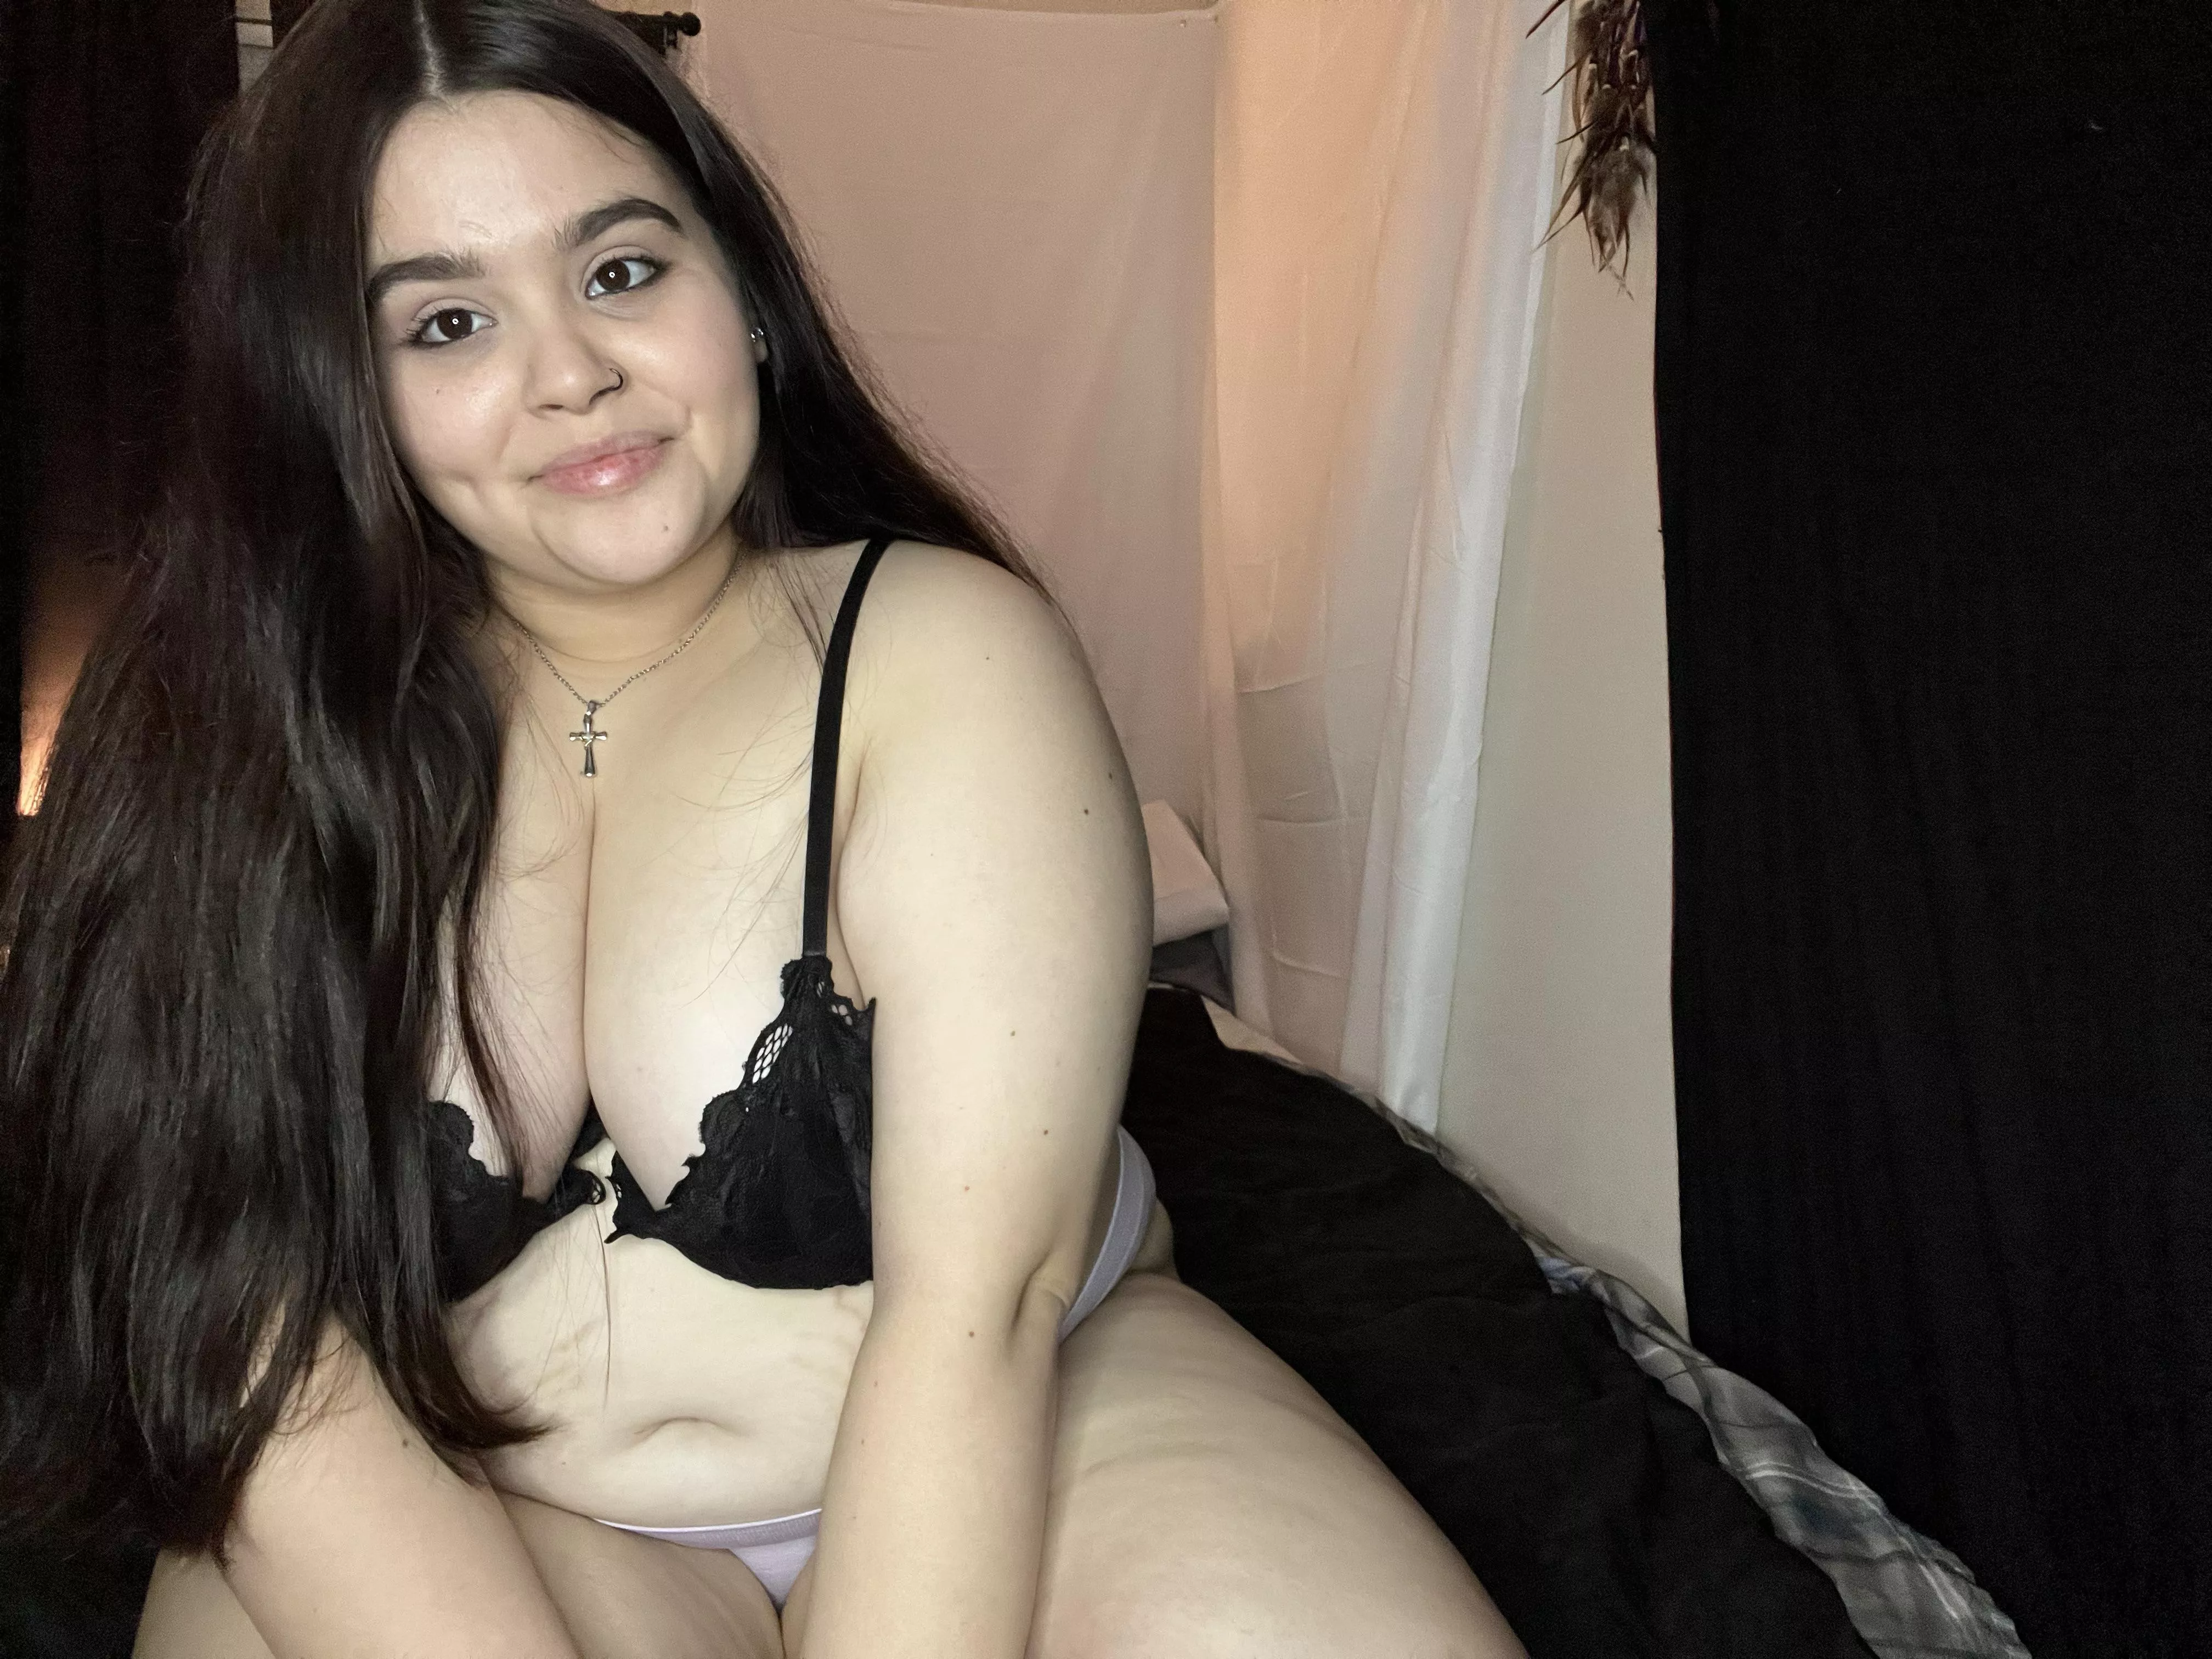 Chubby Latina Women Nude